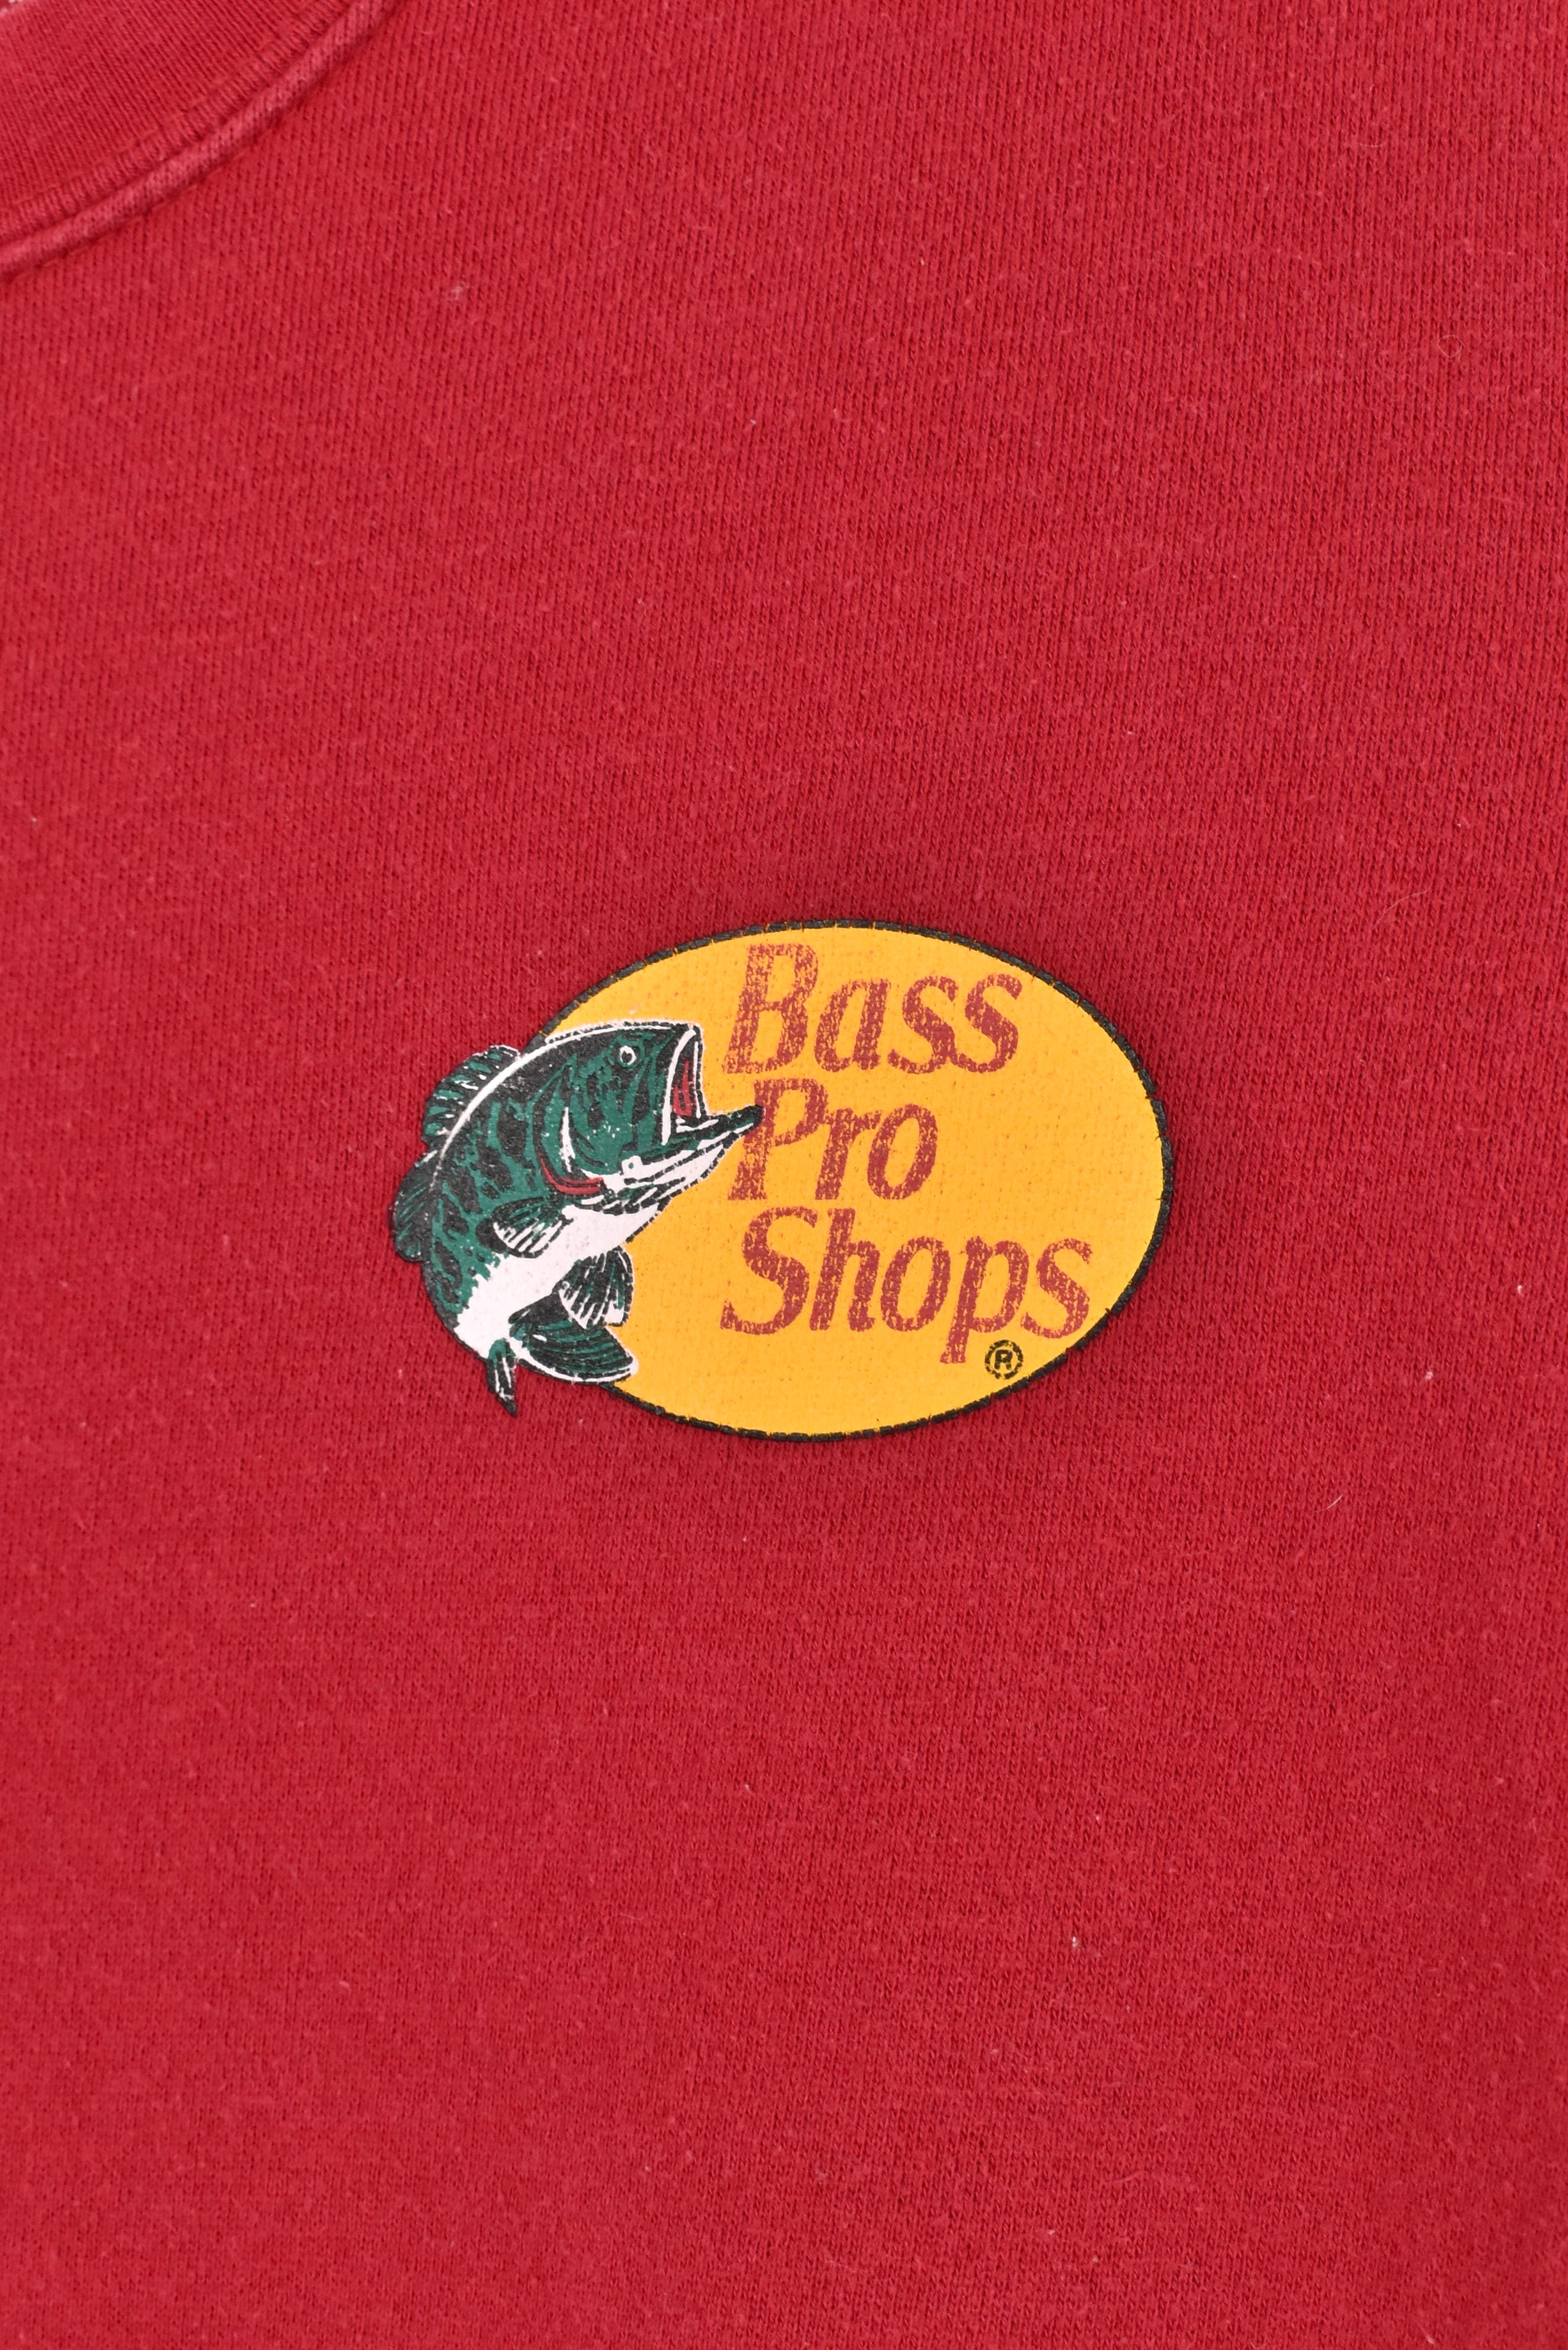 Vintage Bass Pro Shops sweatshirt, red graphic crewneck - AU Small